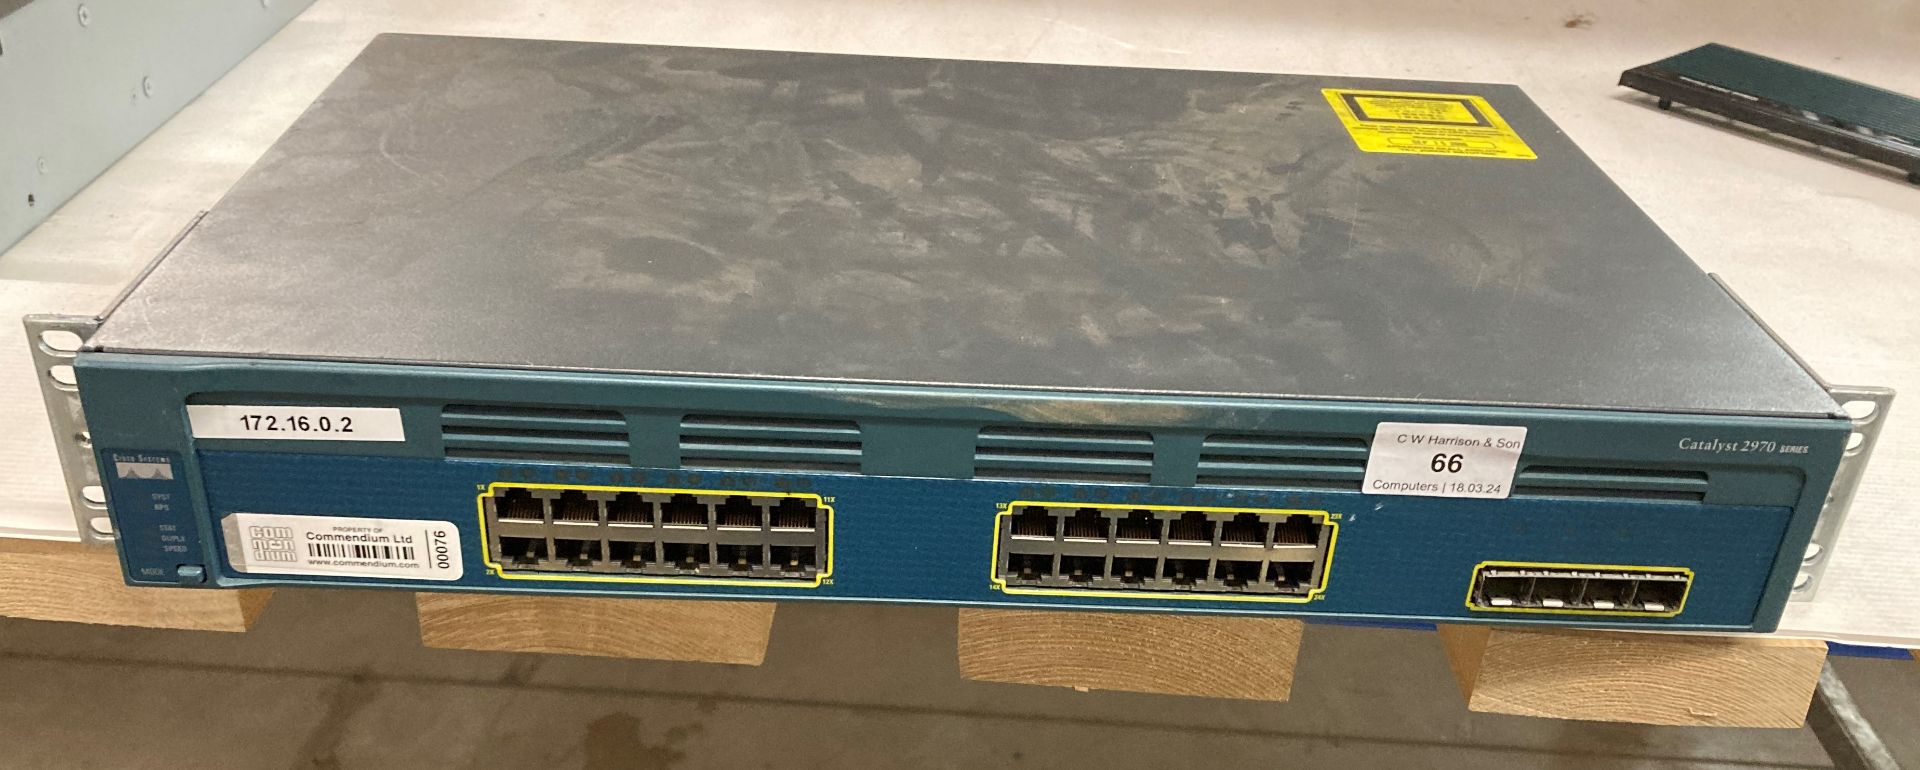 Cisco Catalyst 2970 series rack mountable 24-port switch (no lead) (J10)